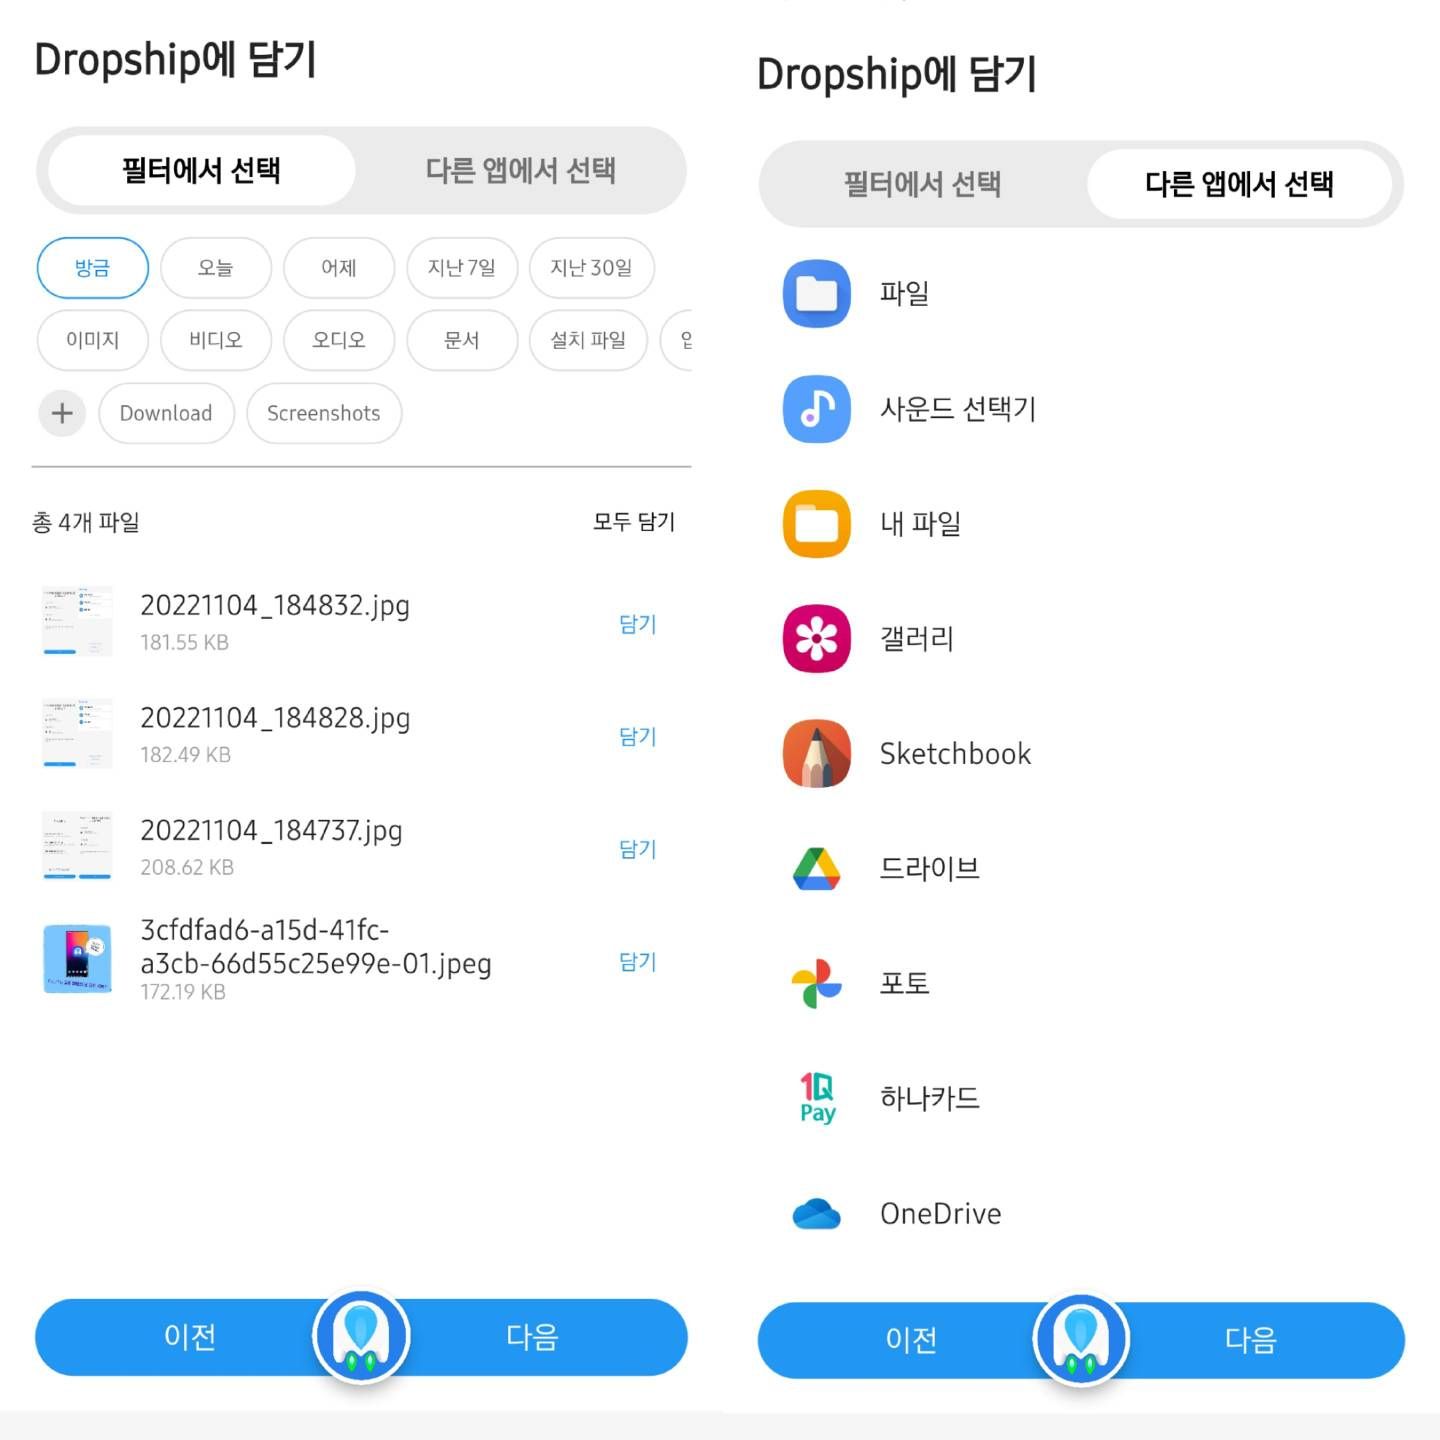 Samsung ออกแอปใหม่ Dropship สามารถแชร์หรือส่งไฟล์ไปยังอุปกรณ์ใดก็ได้ (รวมถึง iPhone ด้วย)